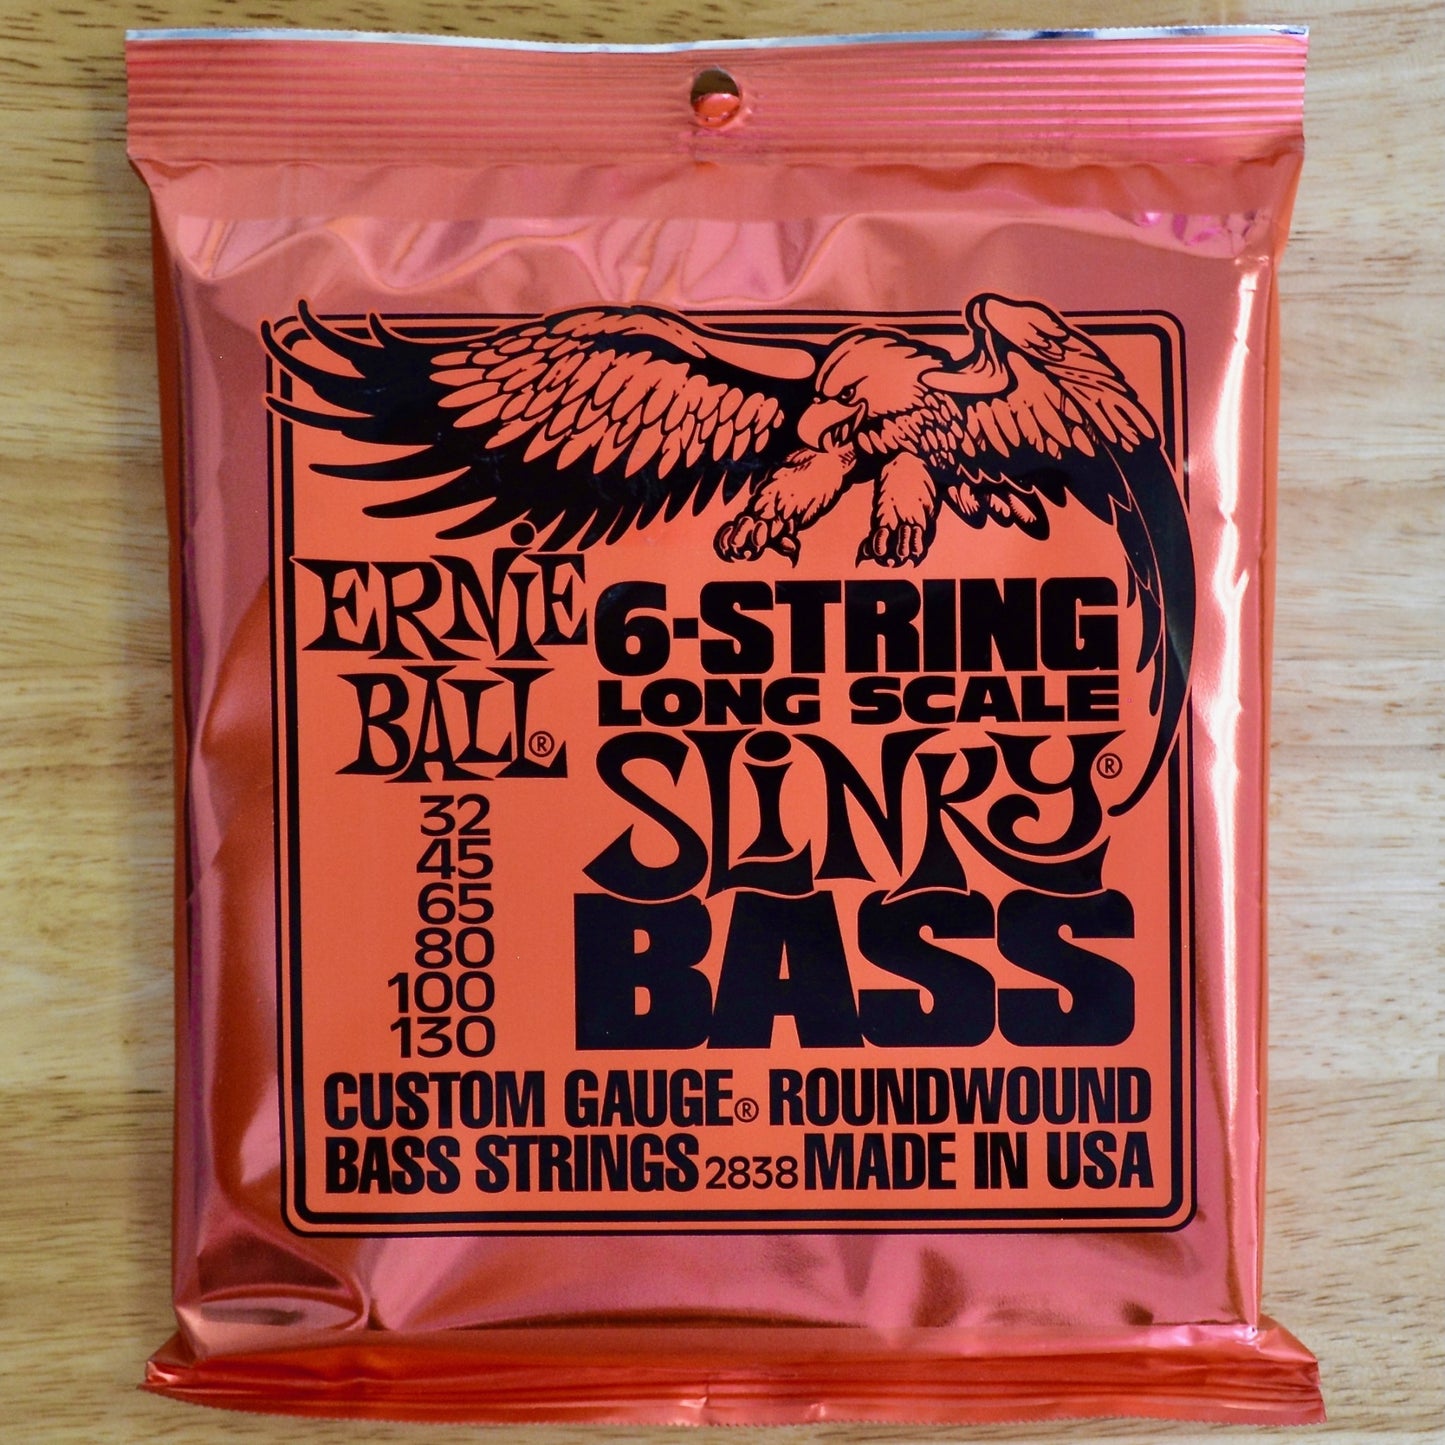 Ernie Ball 6-String Long Scale Slinky Bass